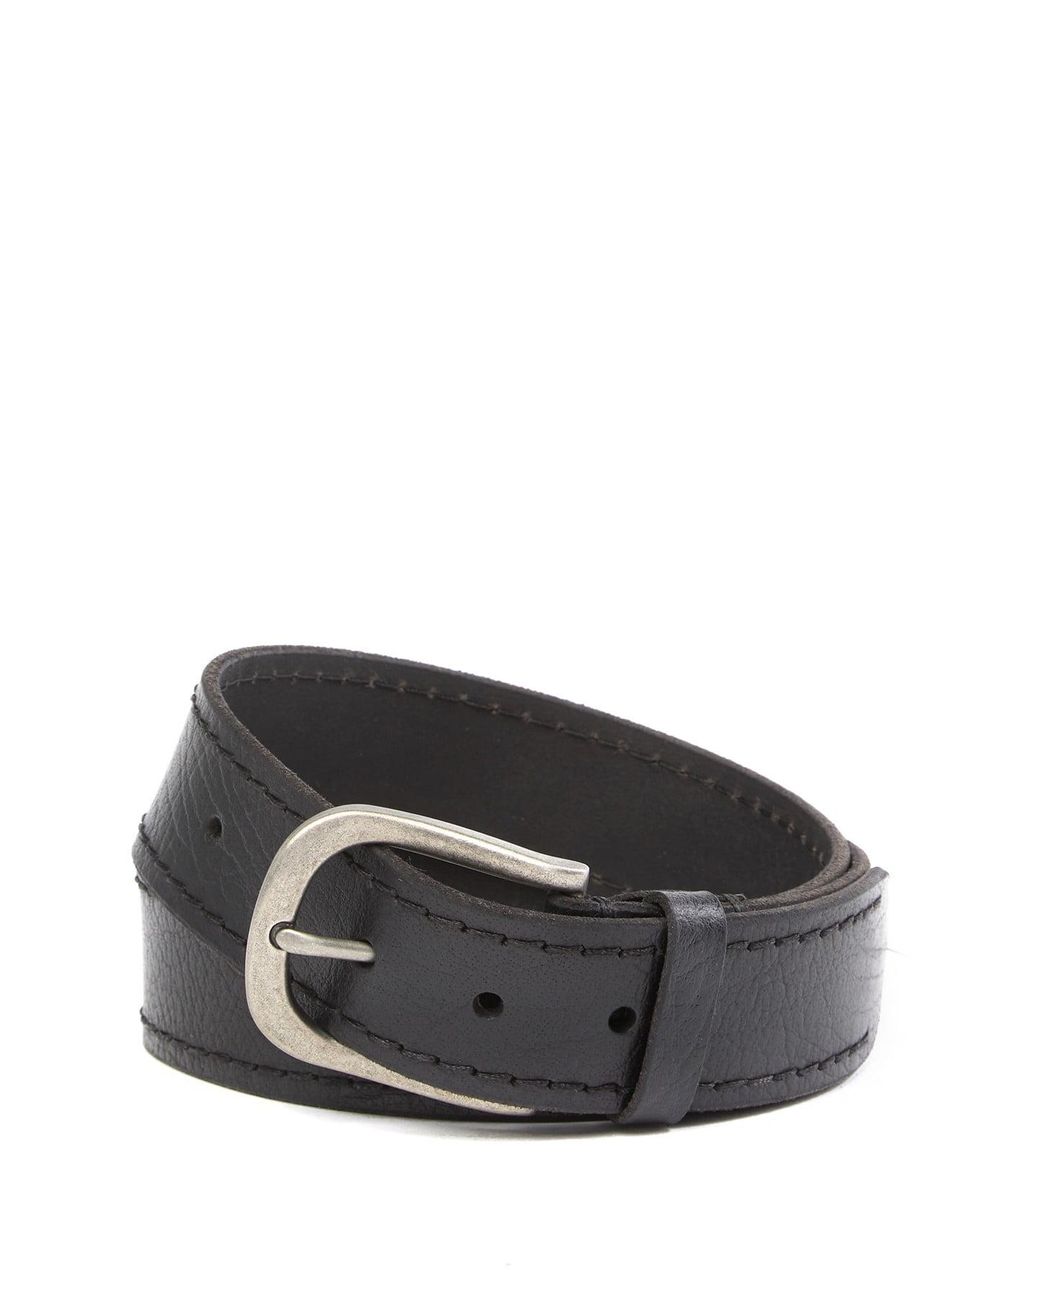 Frye Flat Panel Leather Belt in Black for Men - Lyst